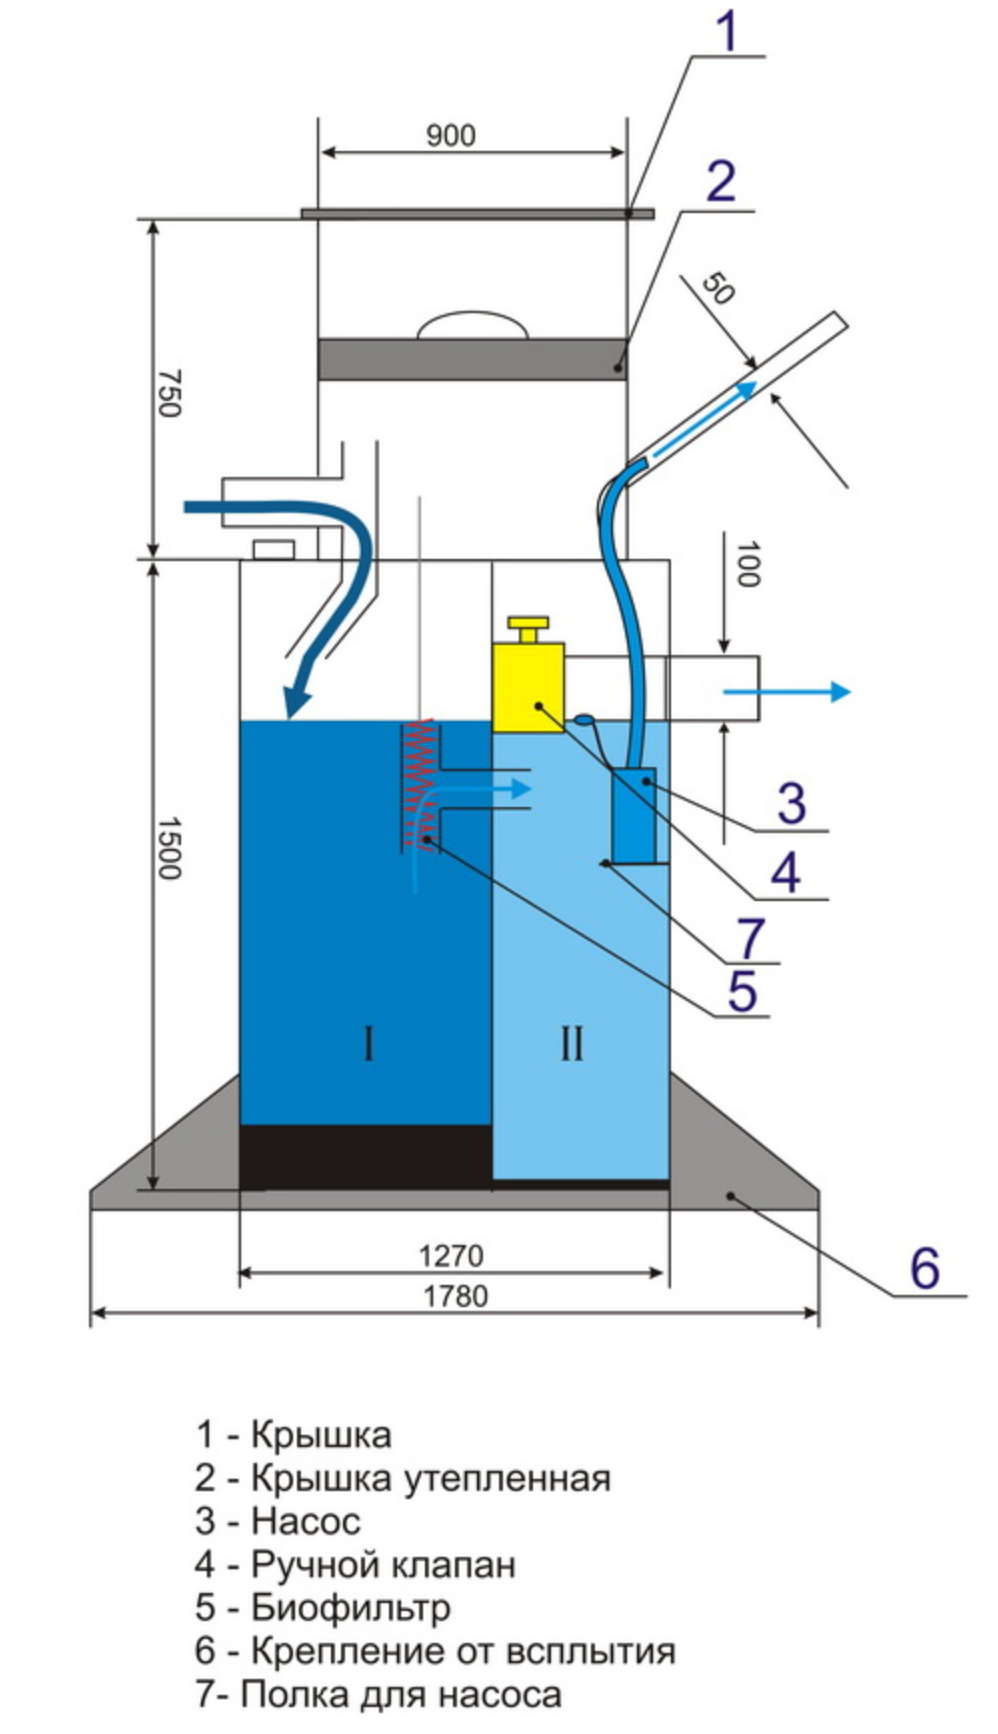 vertikal septik tank